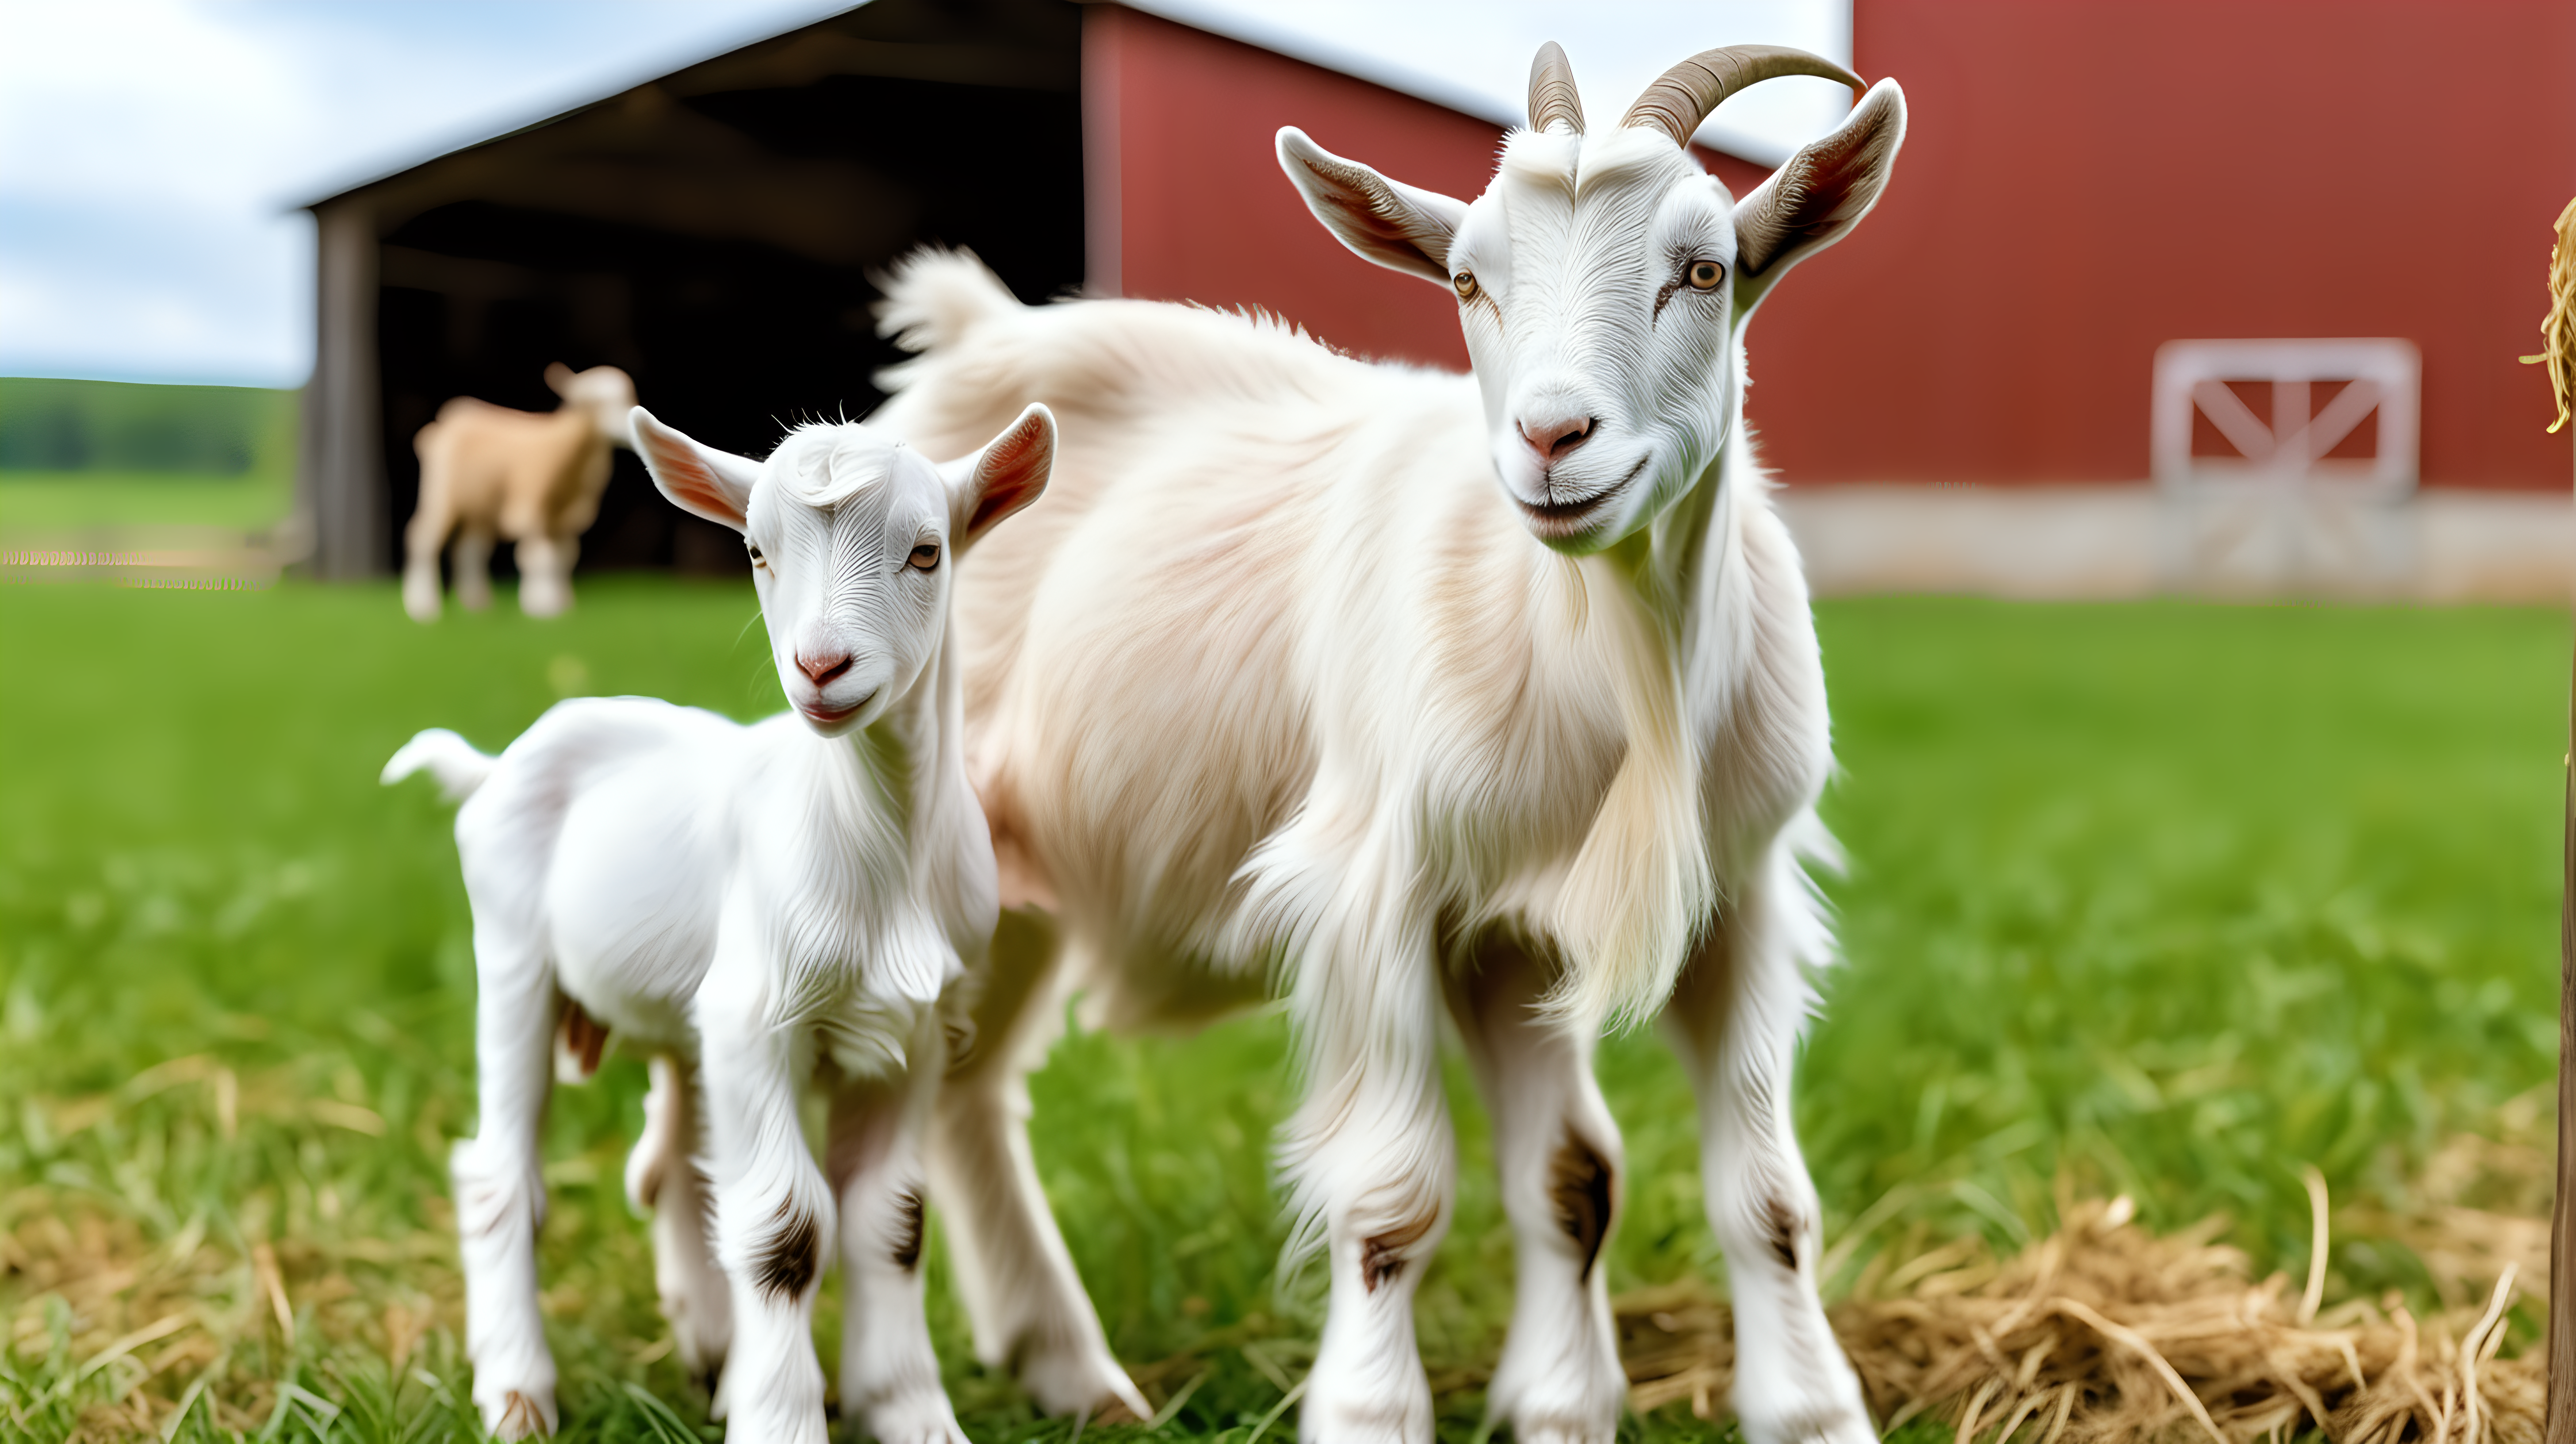 Goat kid with Goat in field farm barn